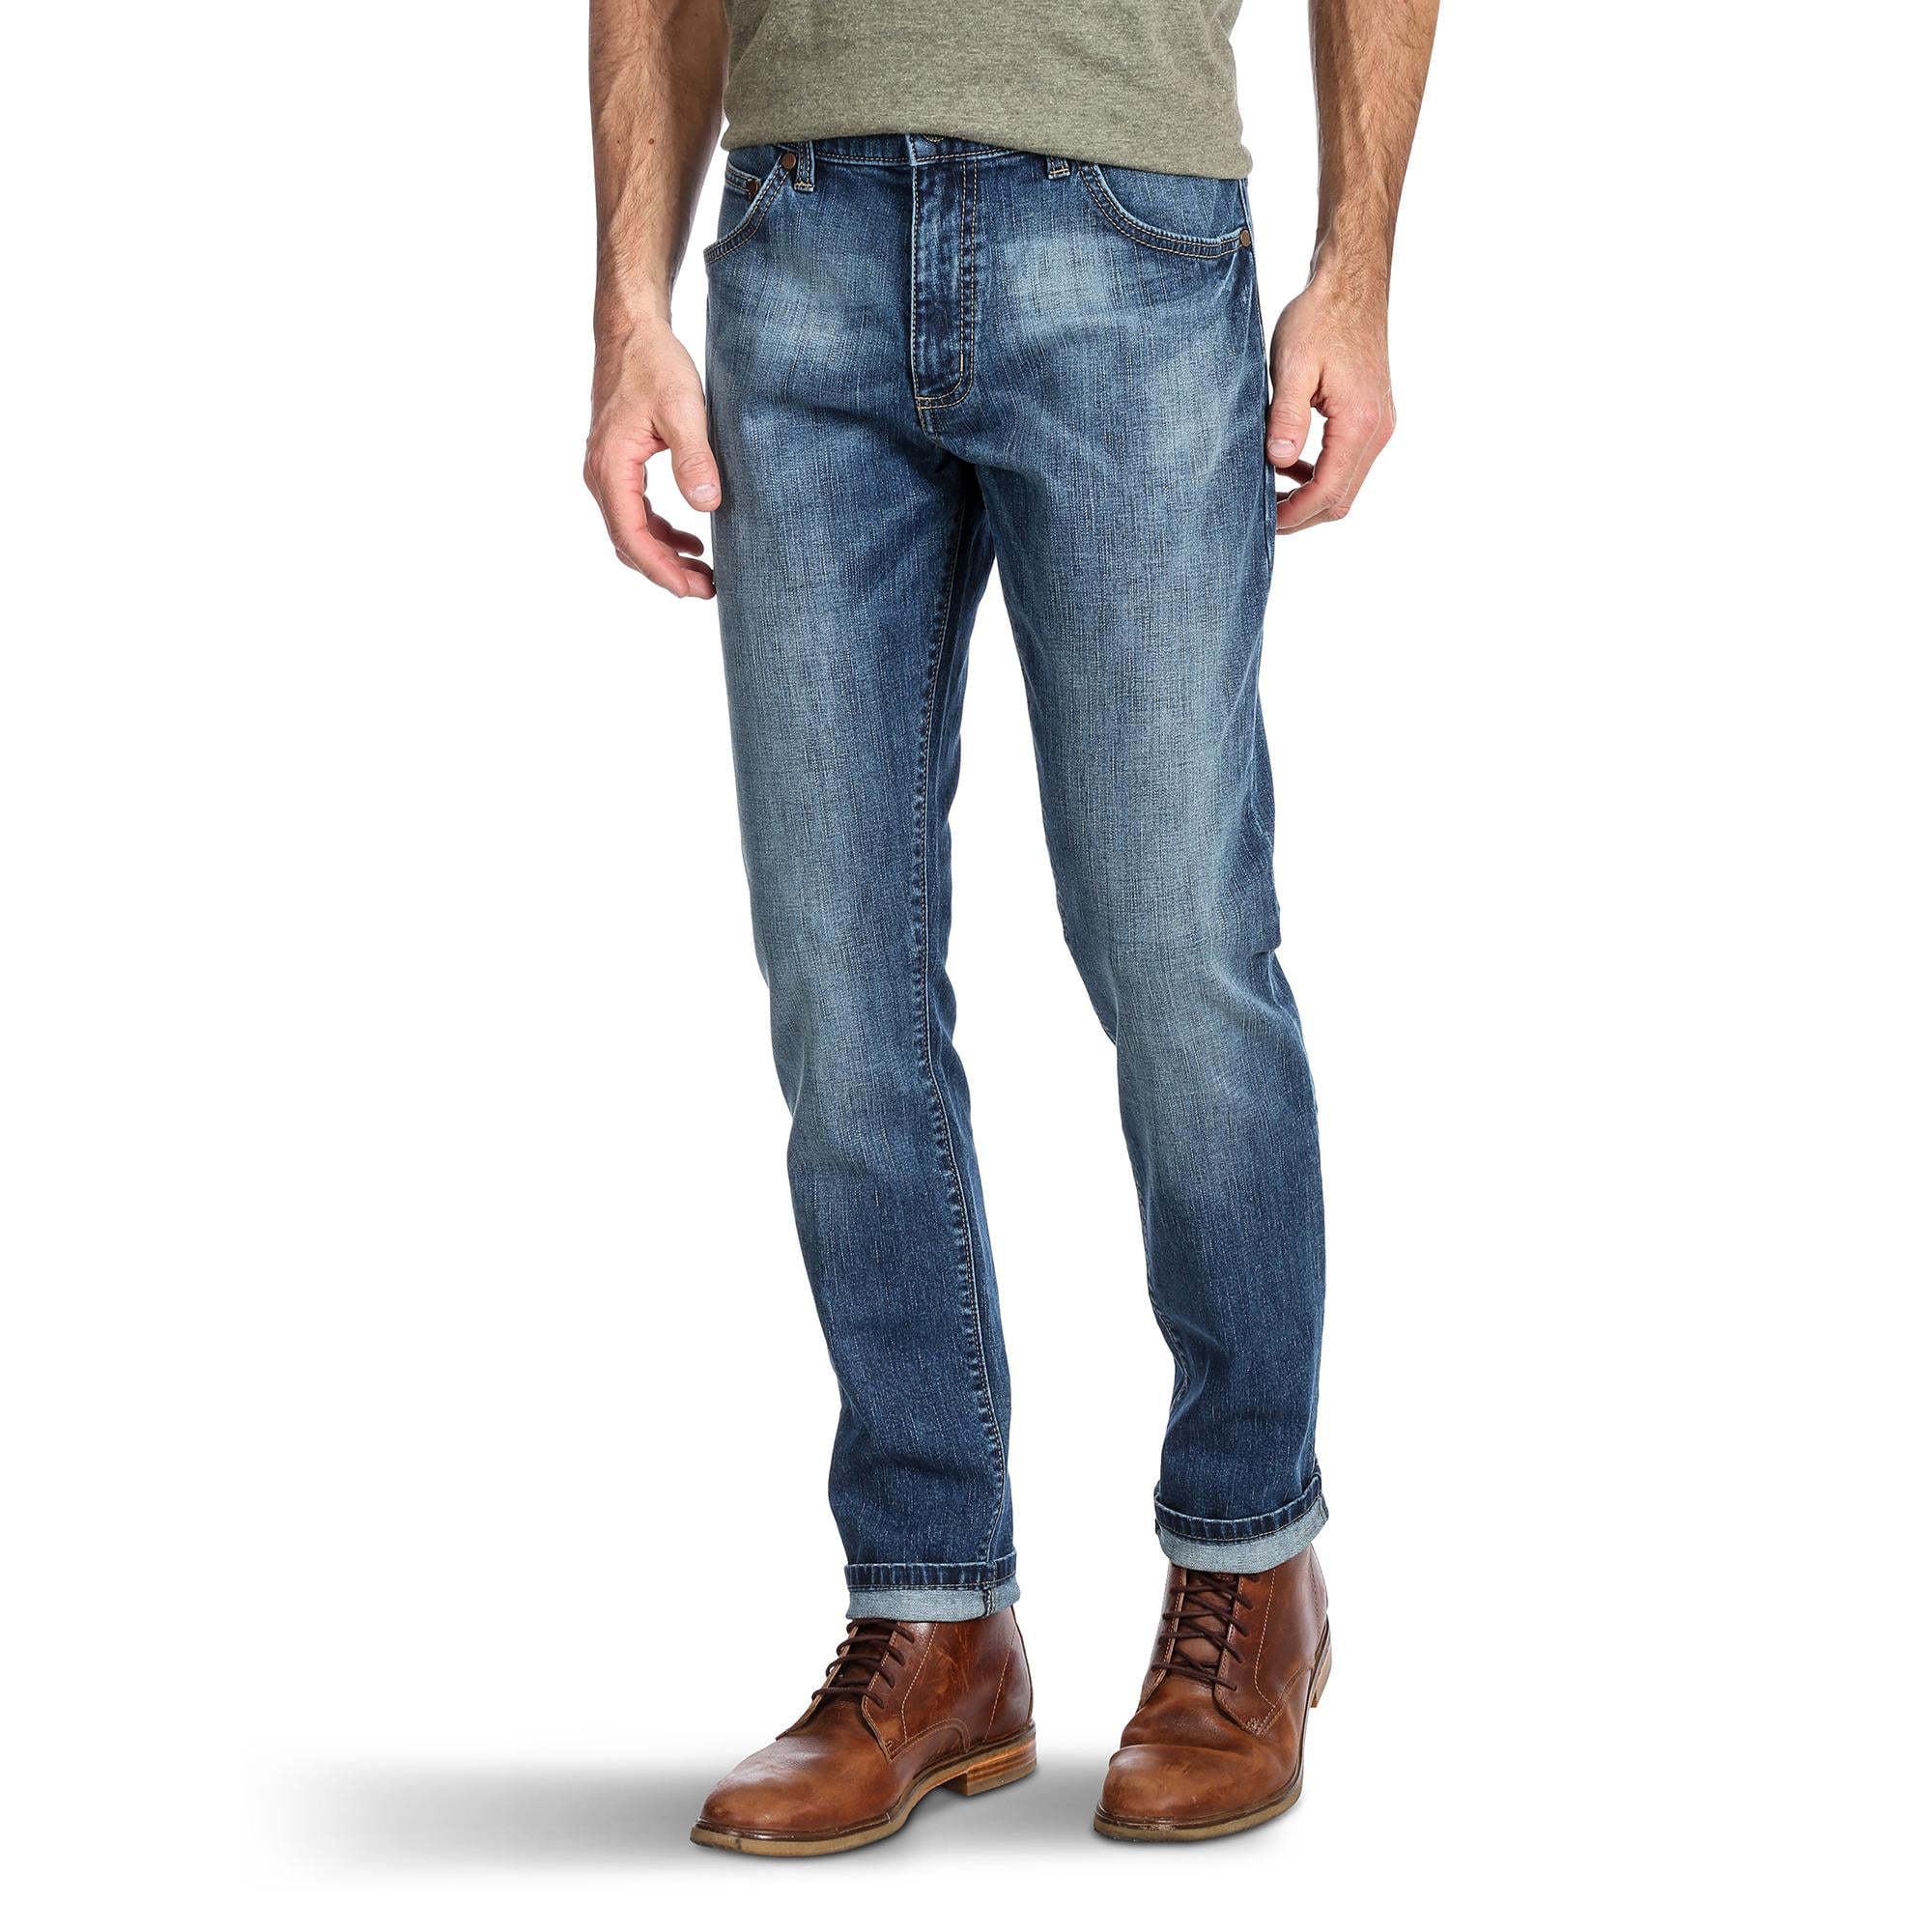 Wrangler Men's Slim Fit Tapered Leg Jeans with Stretch - Walmart.com